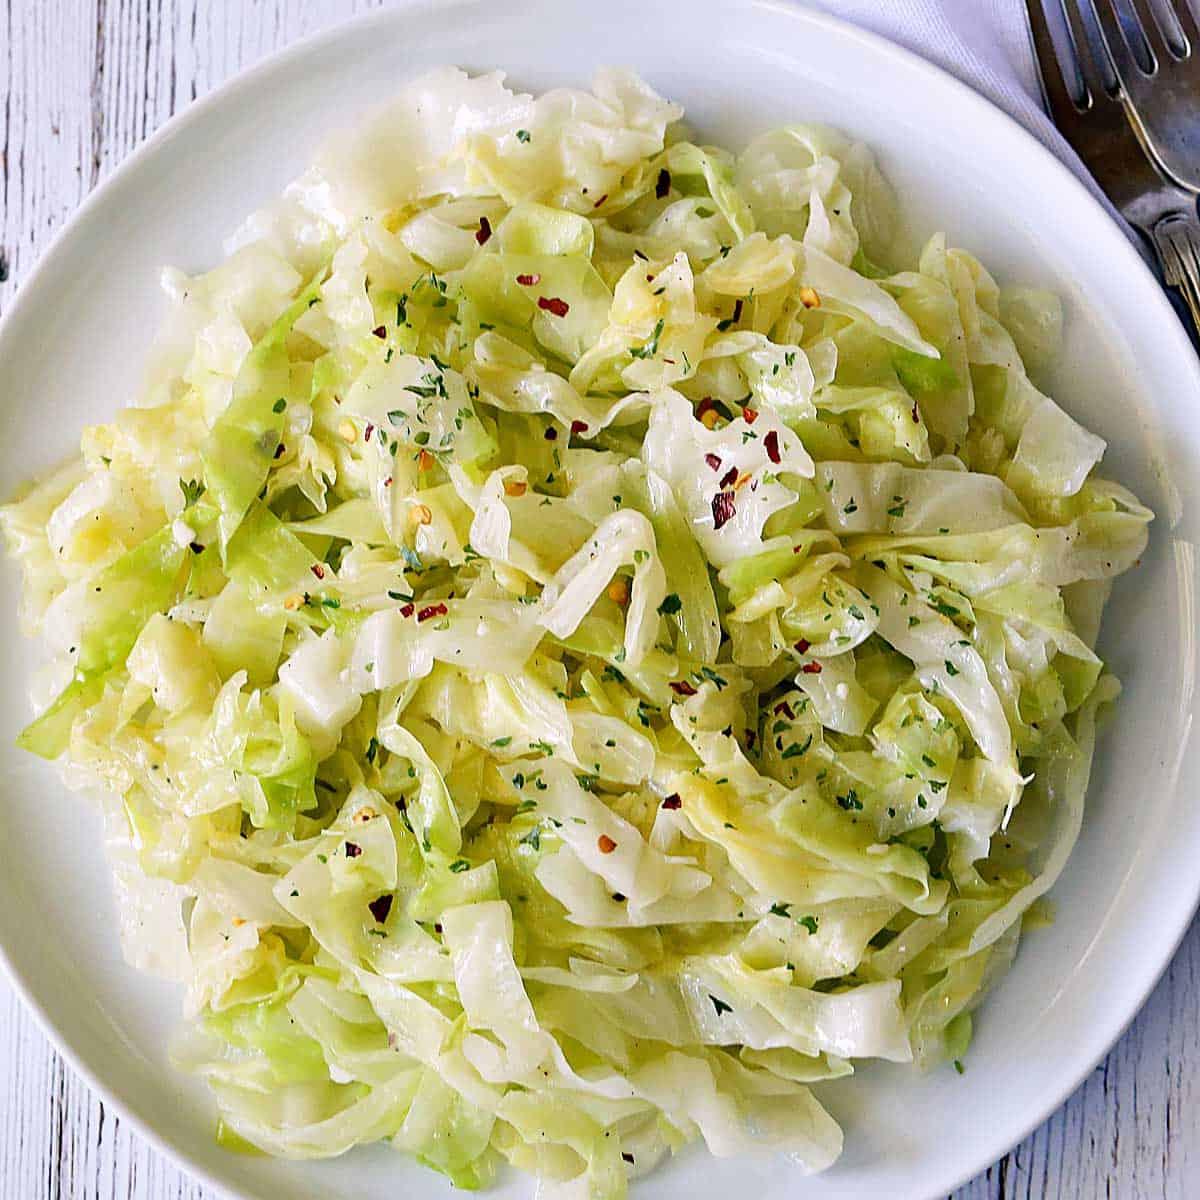 https://healthyrecipesblogs.com/wp-content/uploads/2013/10/steamed-cabbage-featured-2022.jpg